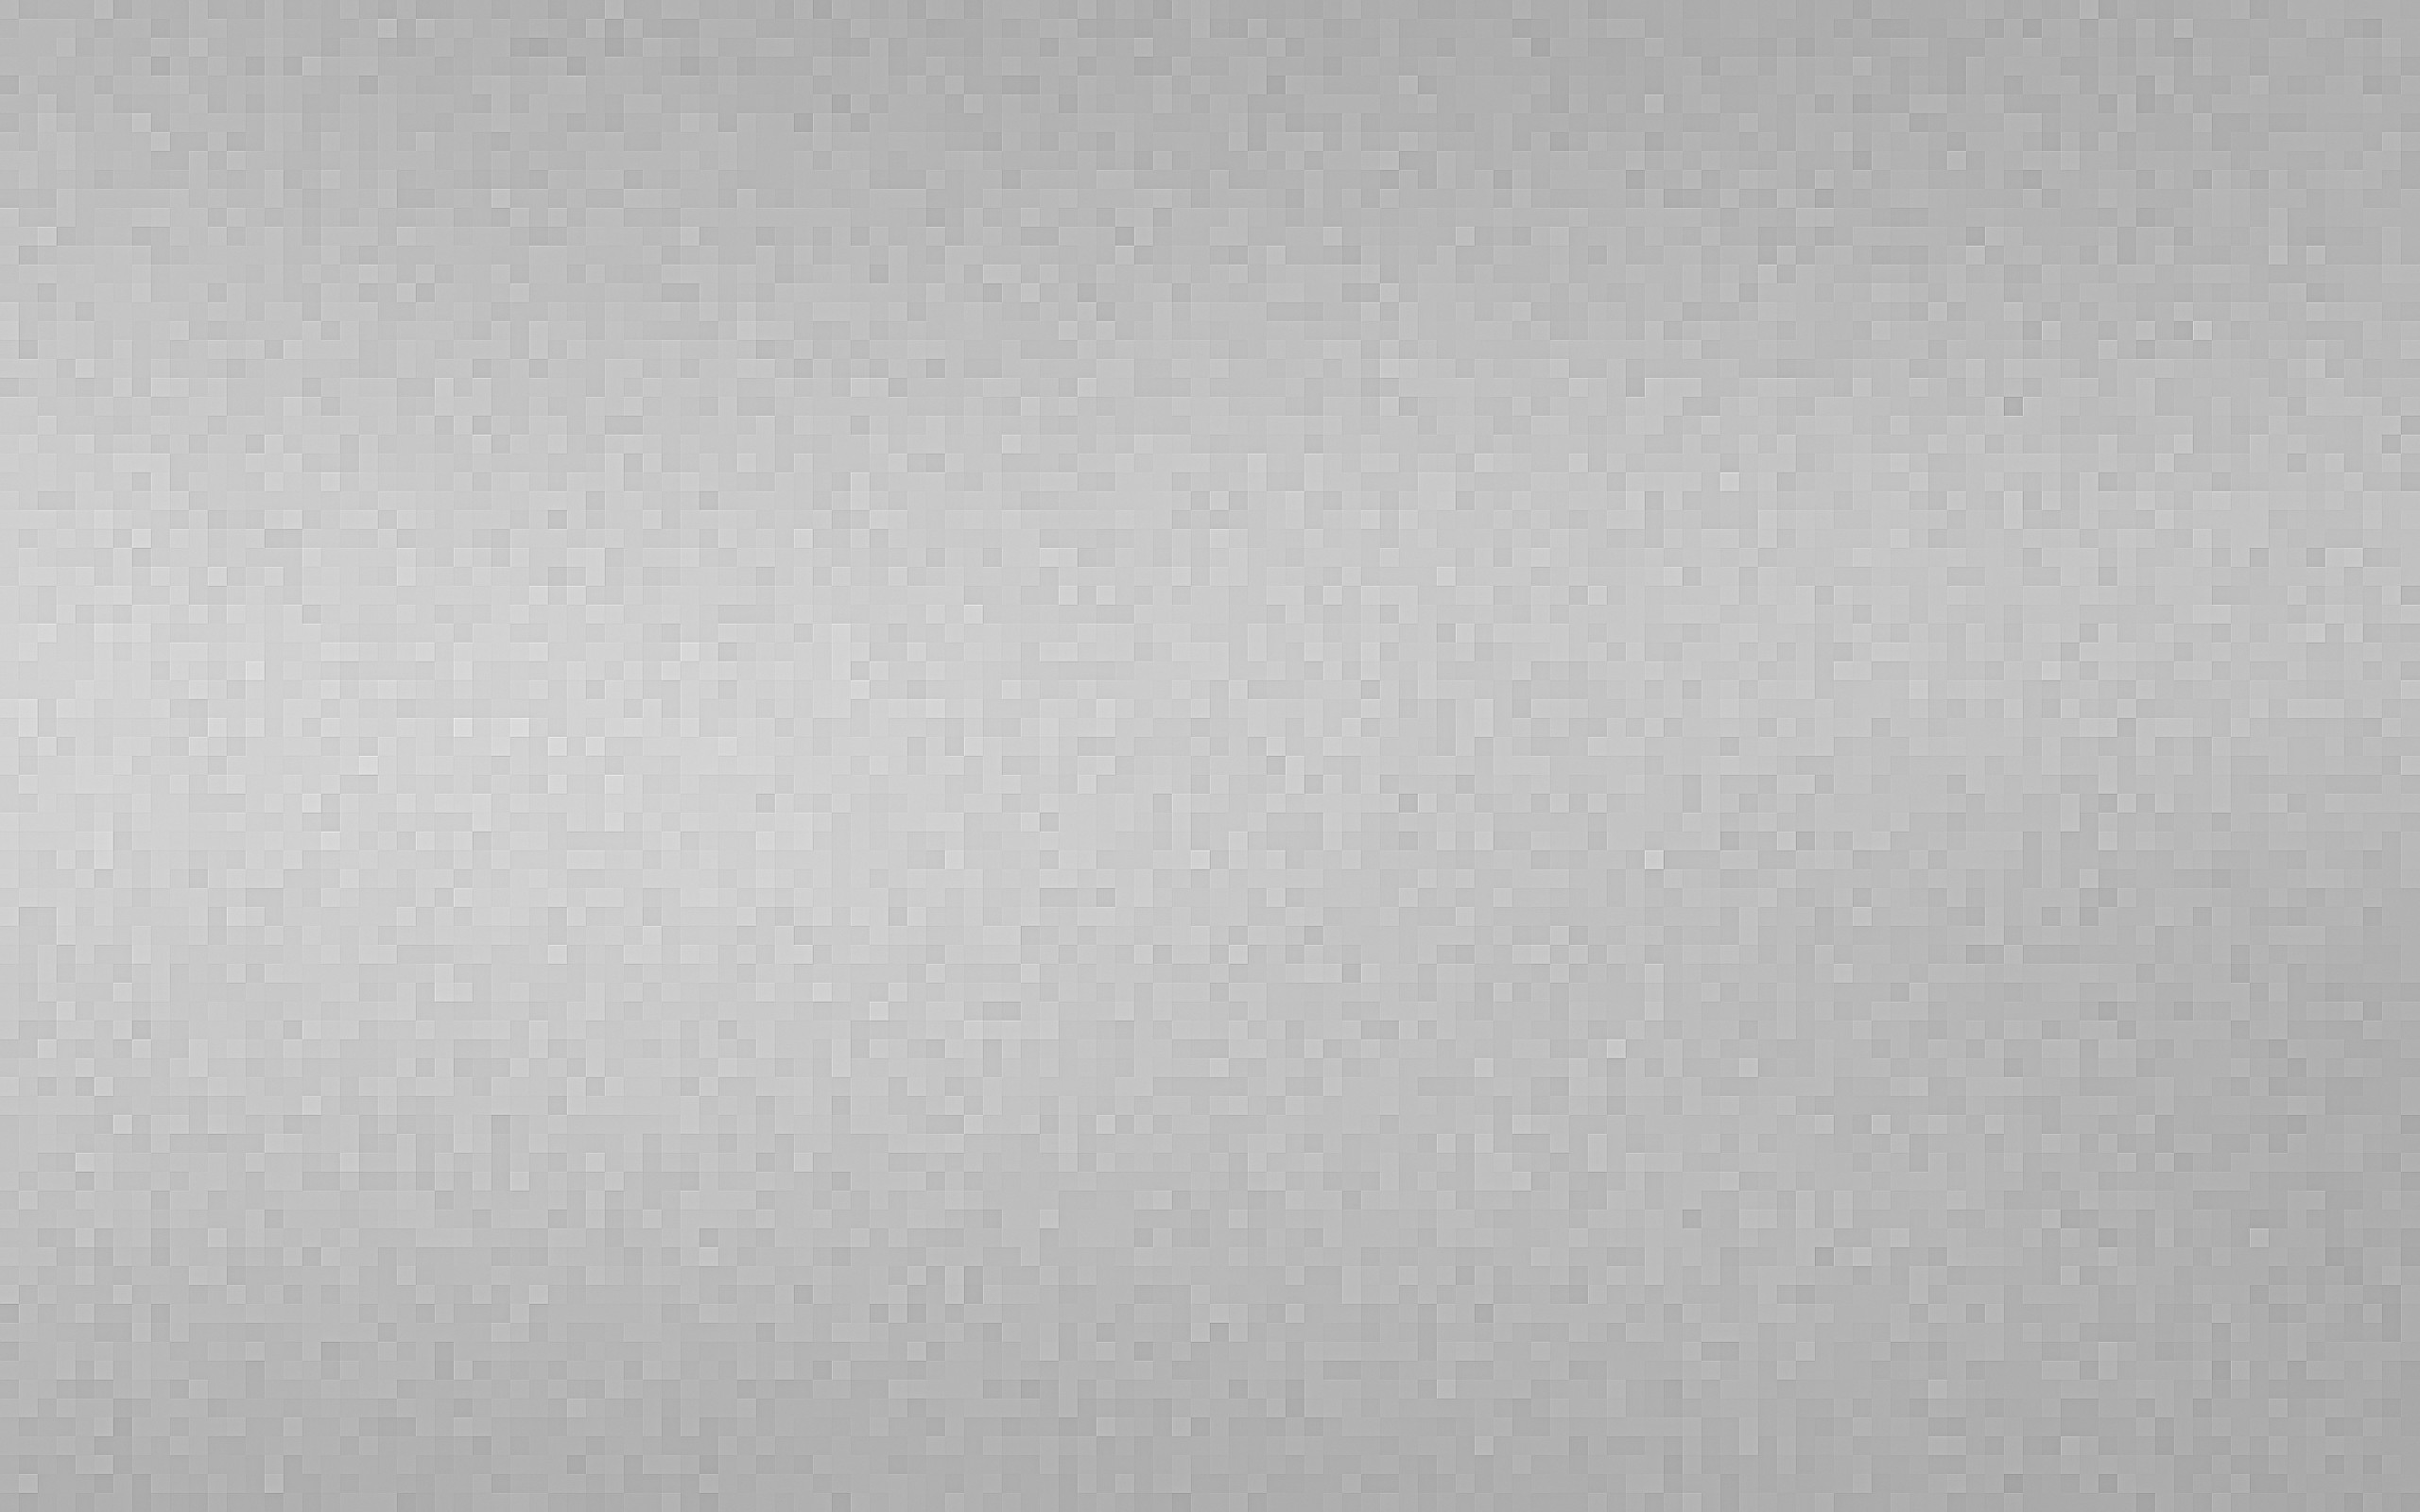  Grey  wallpaper    Download free stunning full HD  